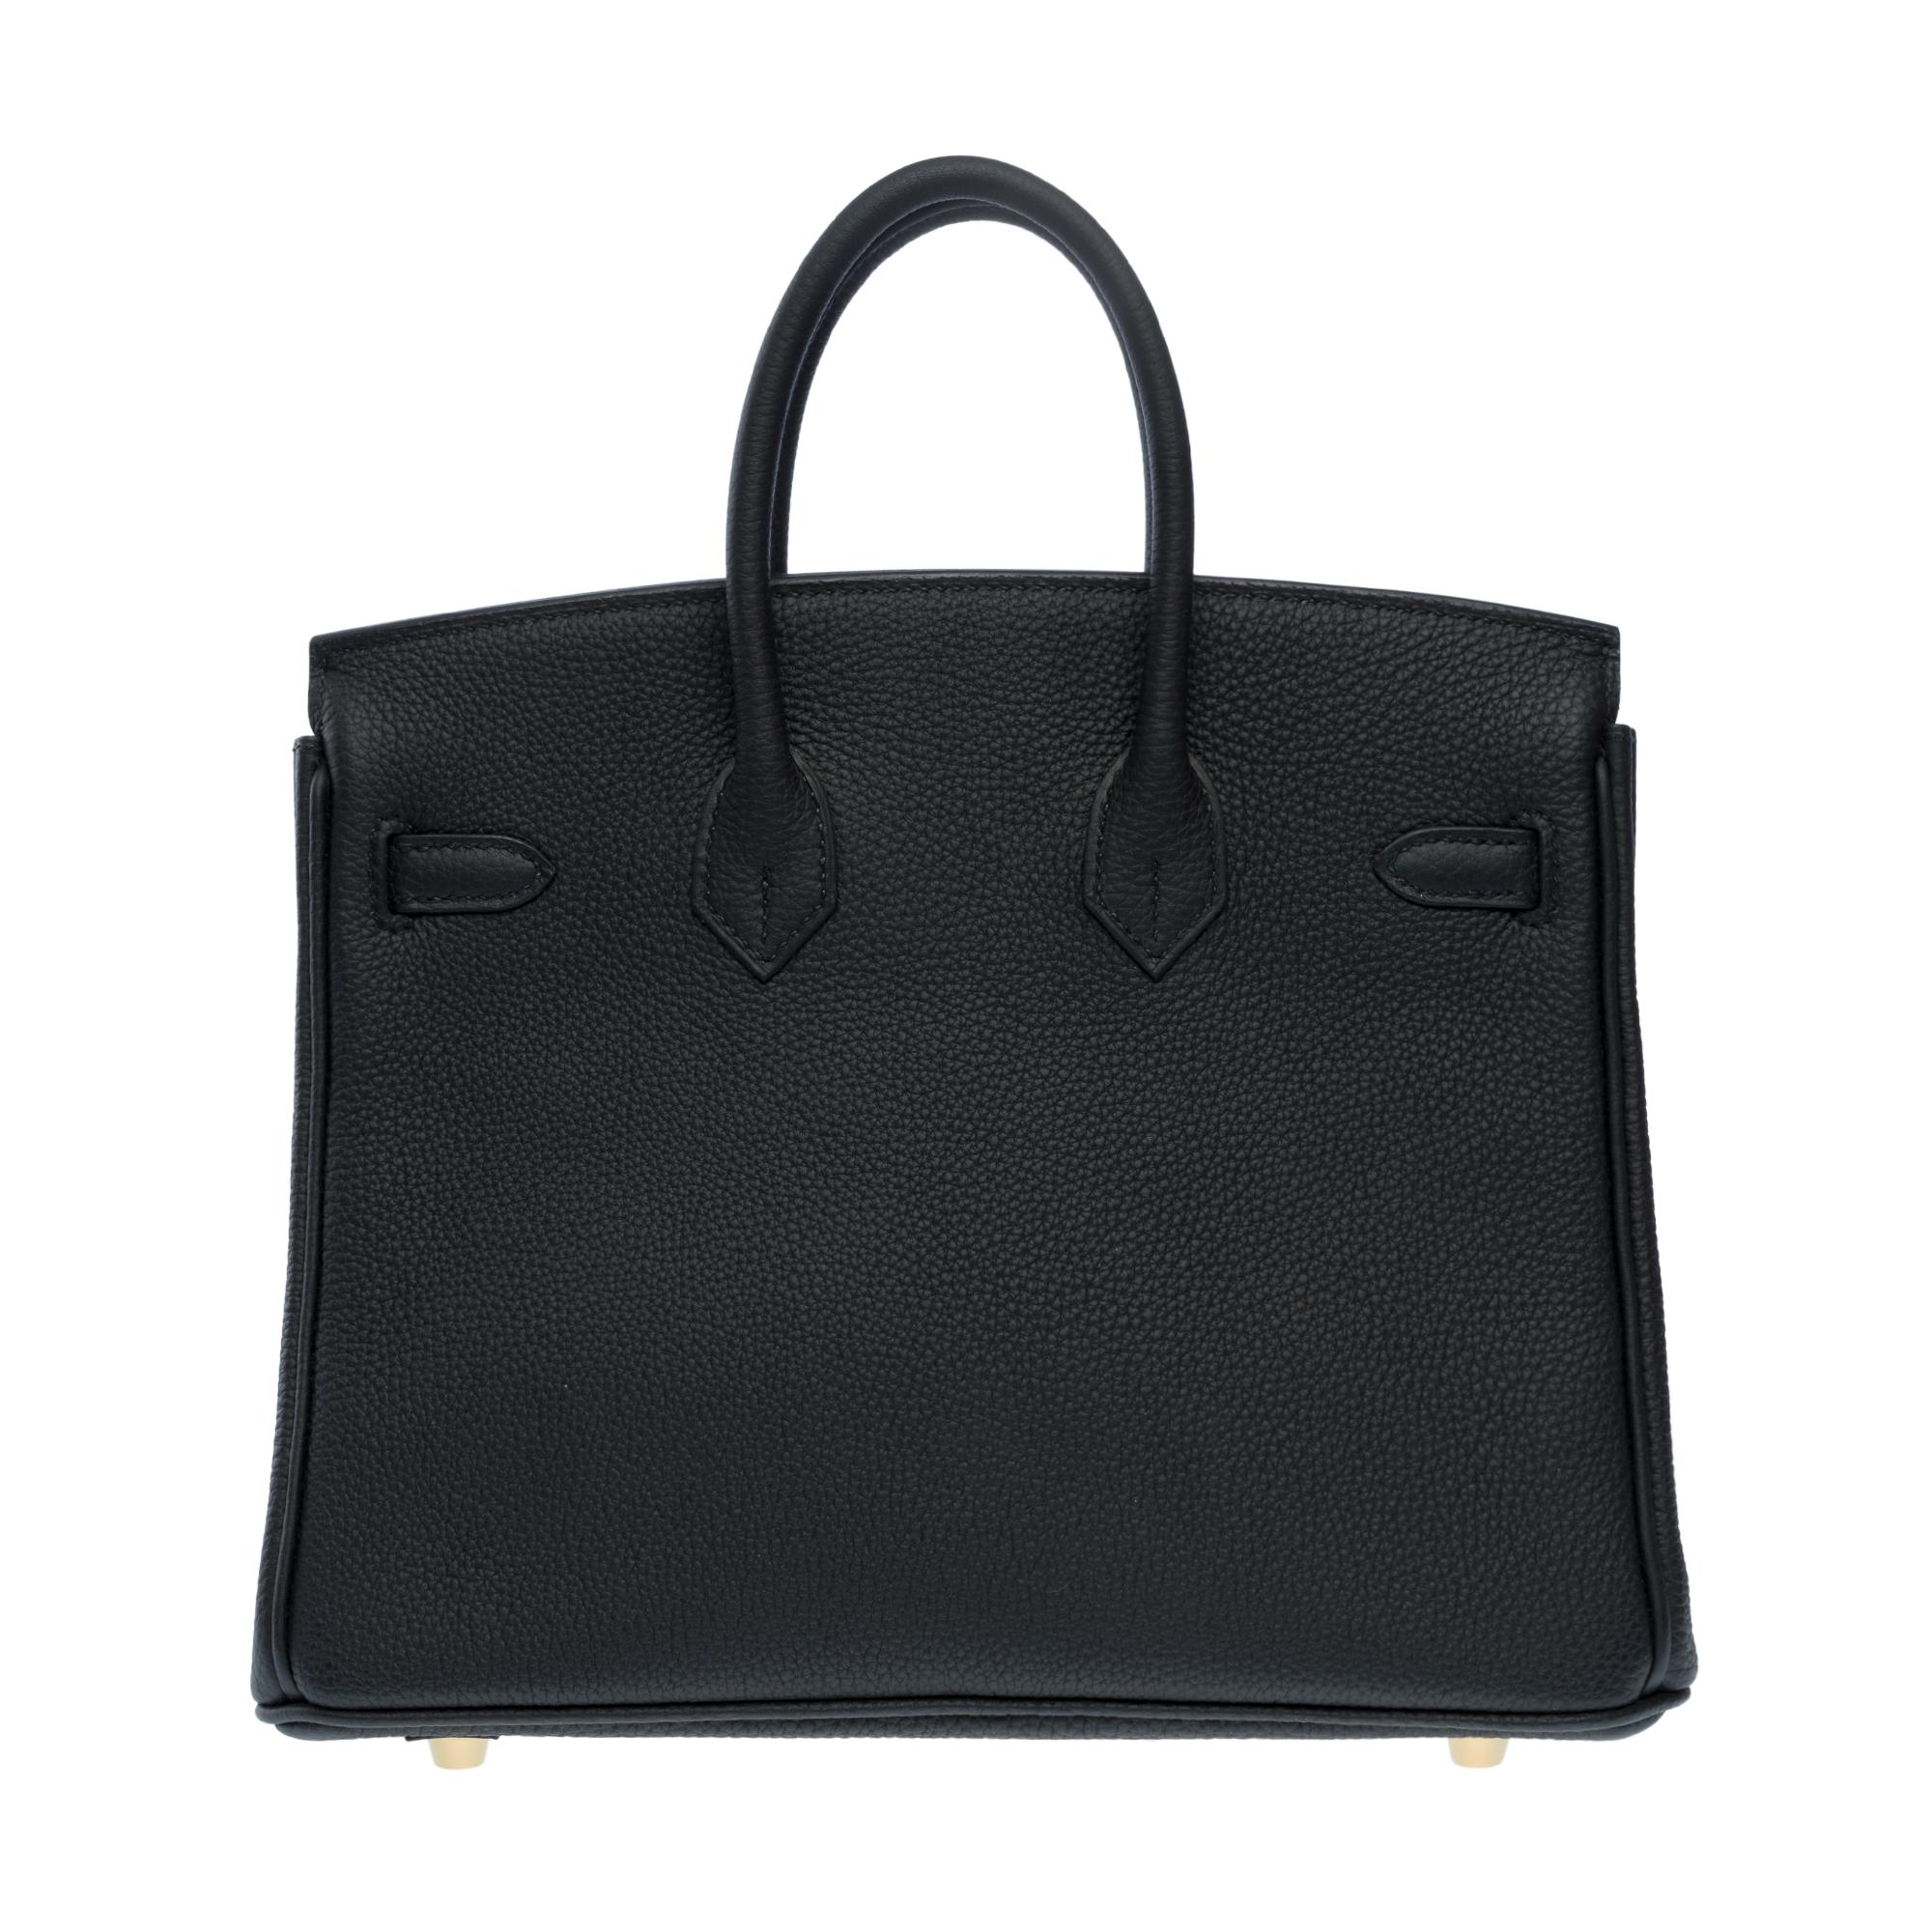 Women's Amazing Hermes Birkin 25 handbag inBlack Togo leather, GHW For Sale